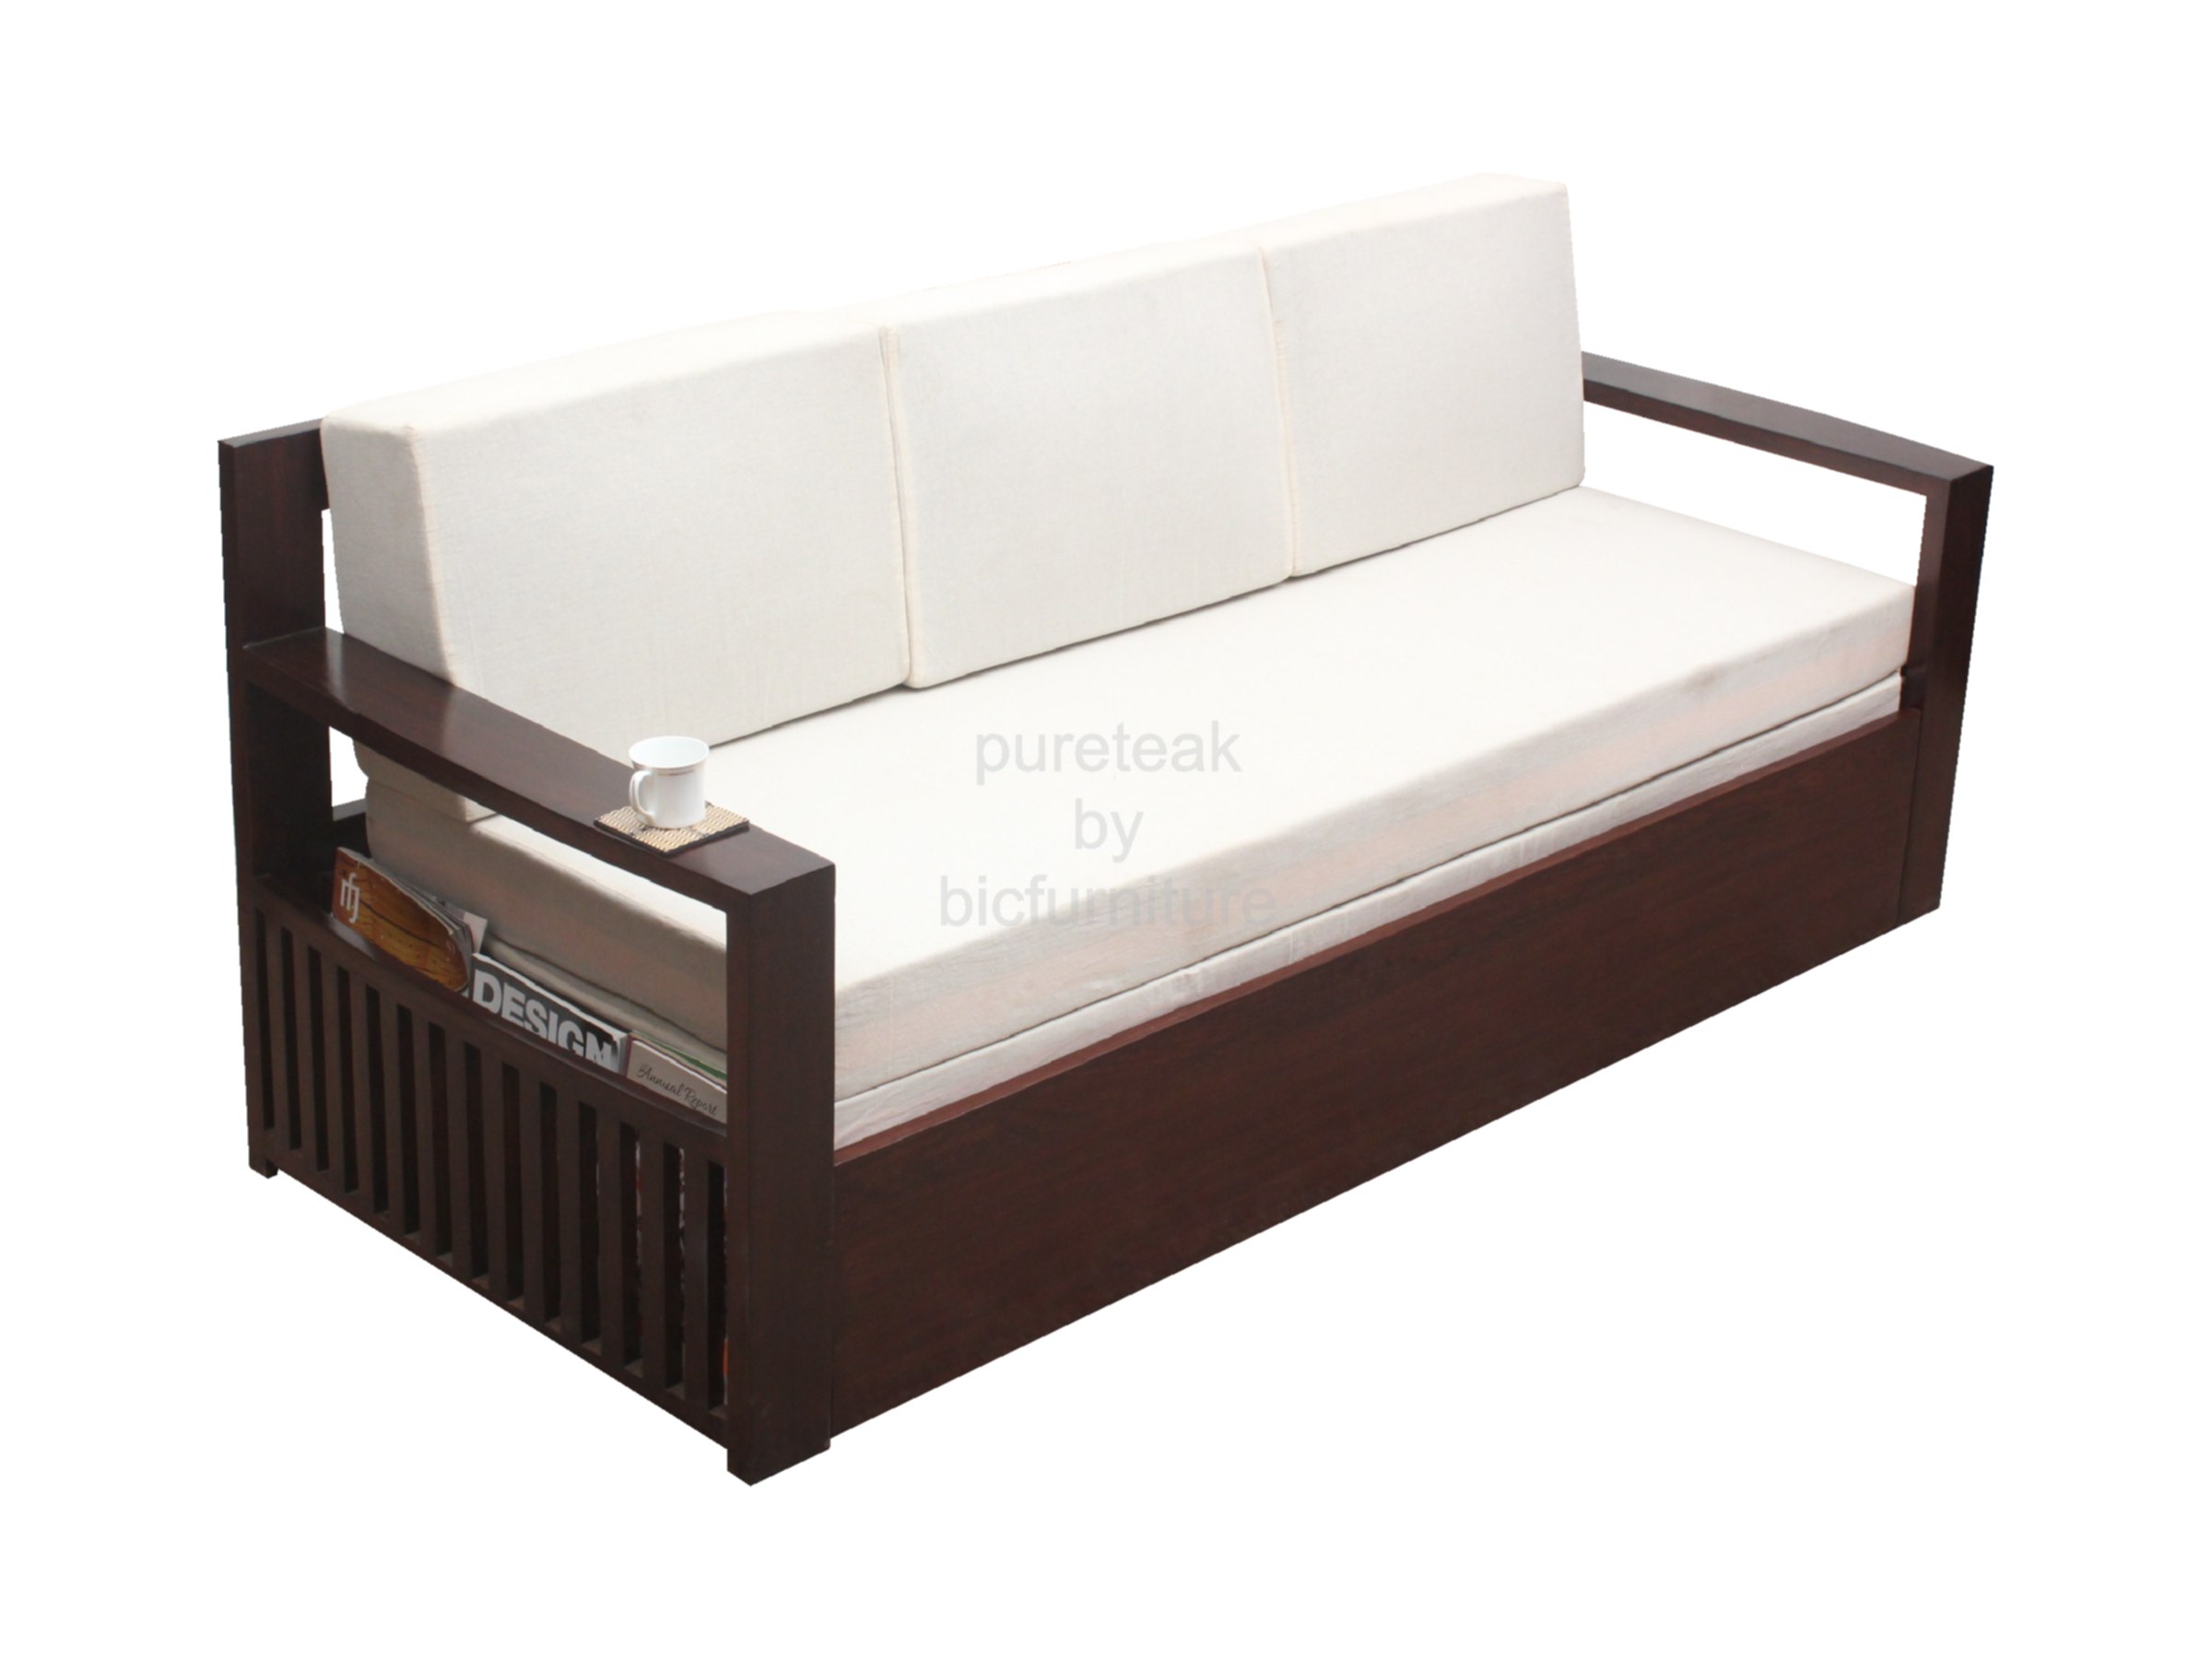 Teak Wood Sofa Bed With Storage